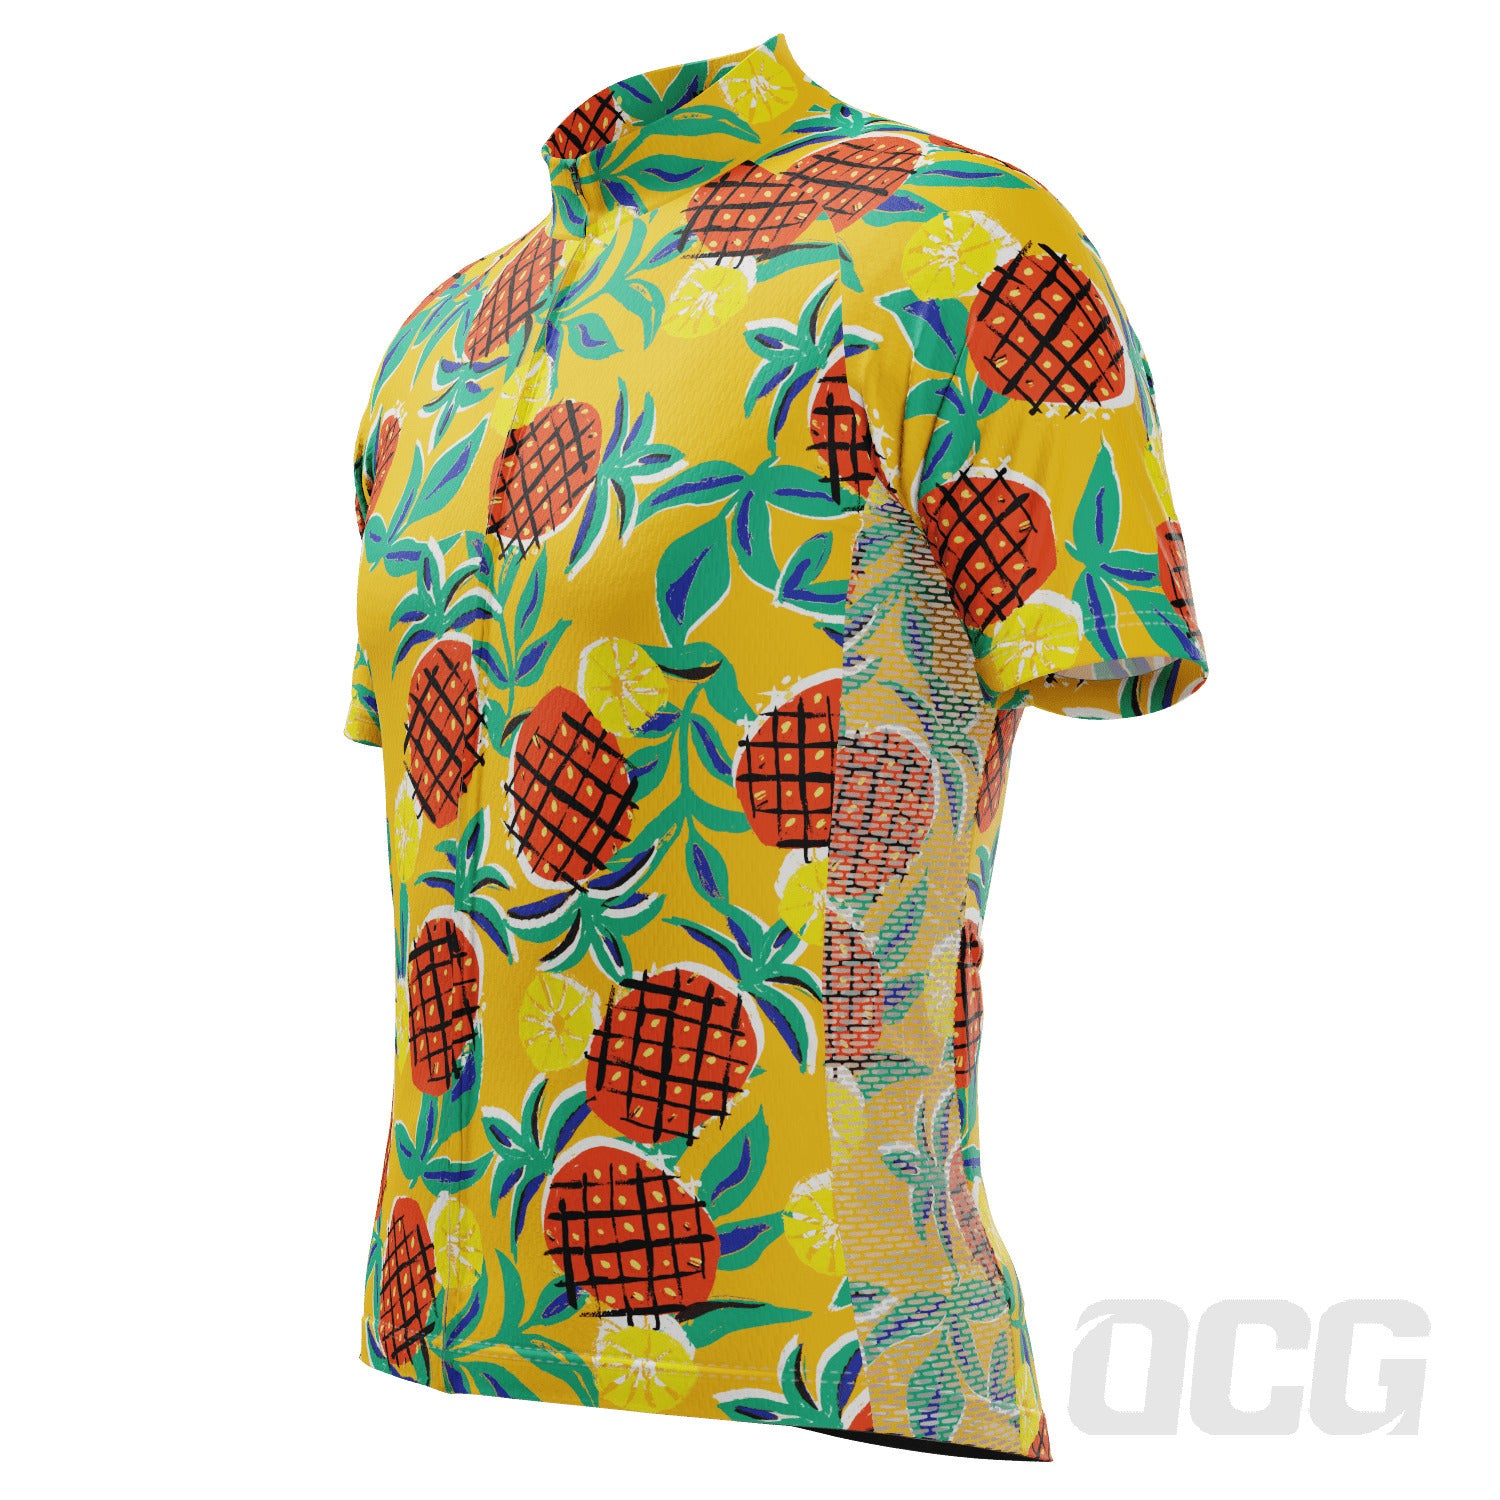 Men's Pineapple Fun Short Sleeve Cycling Jersey